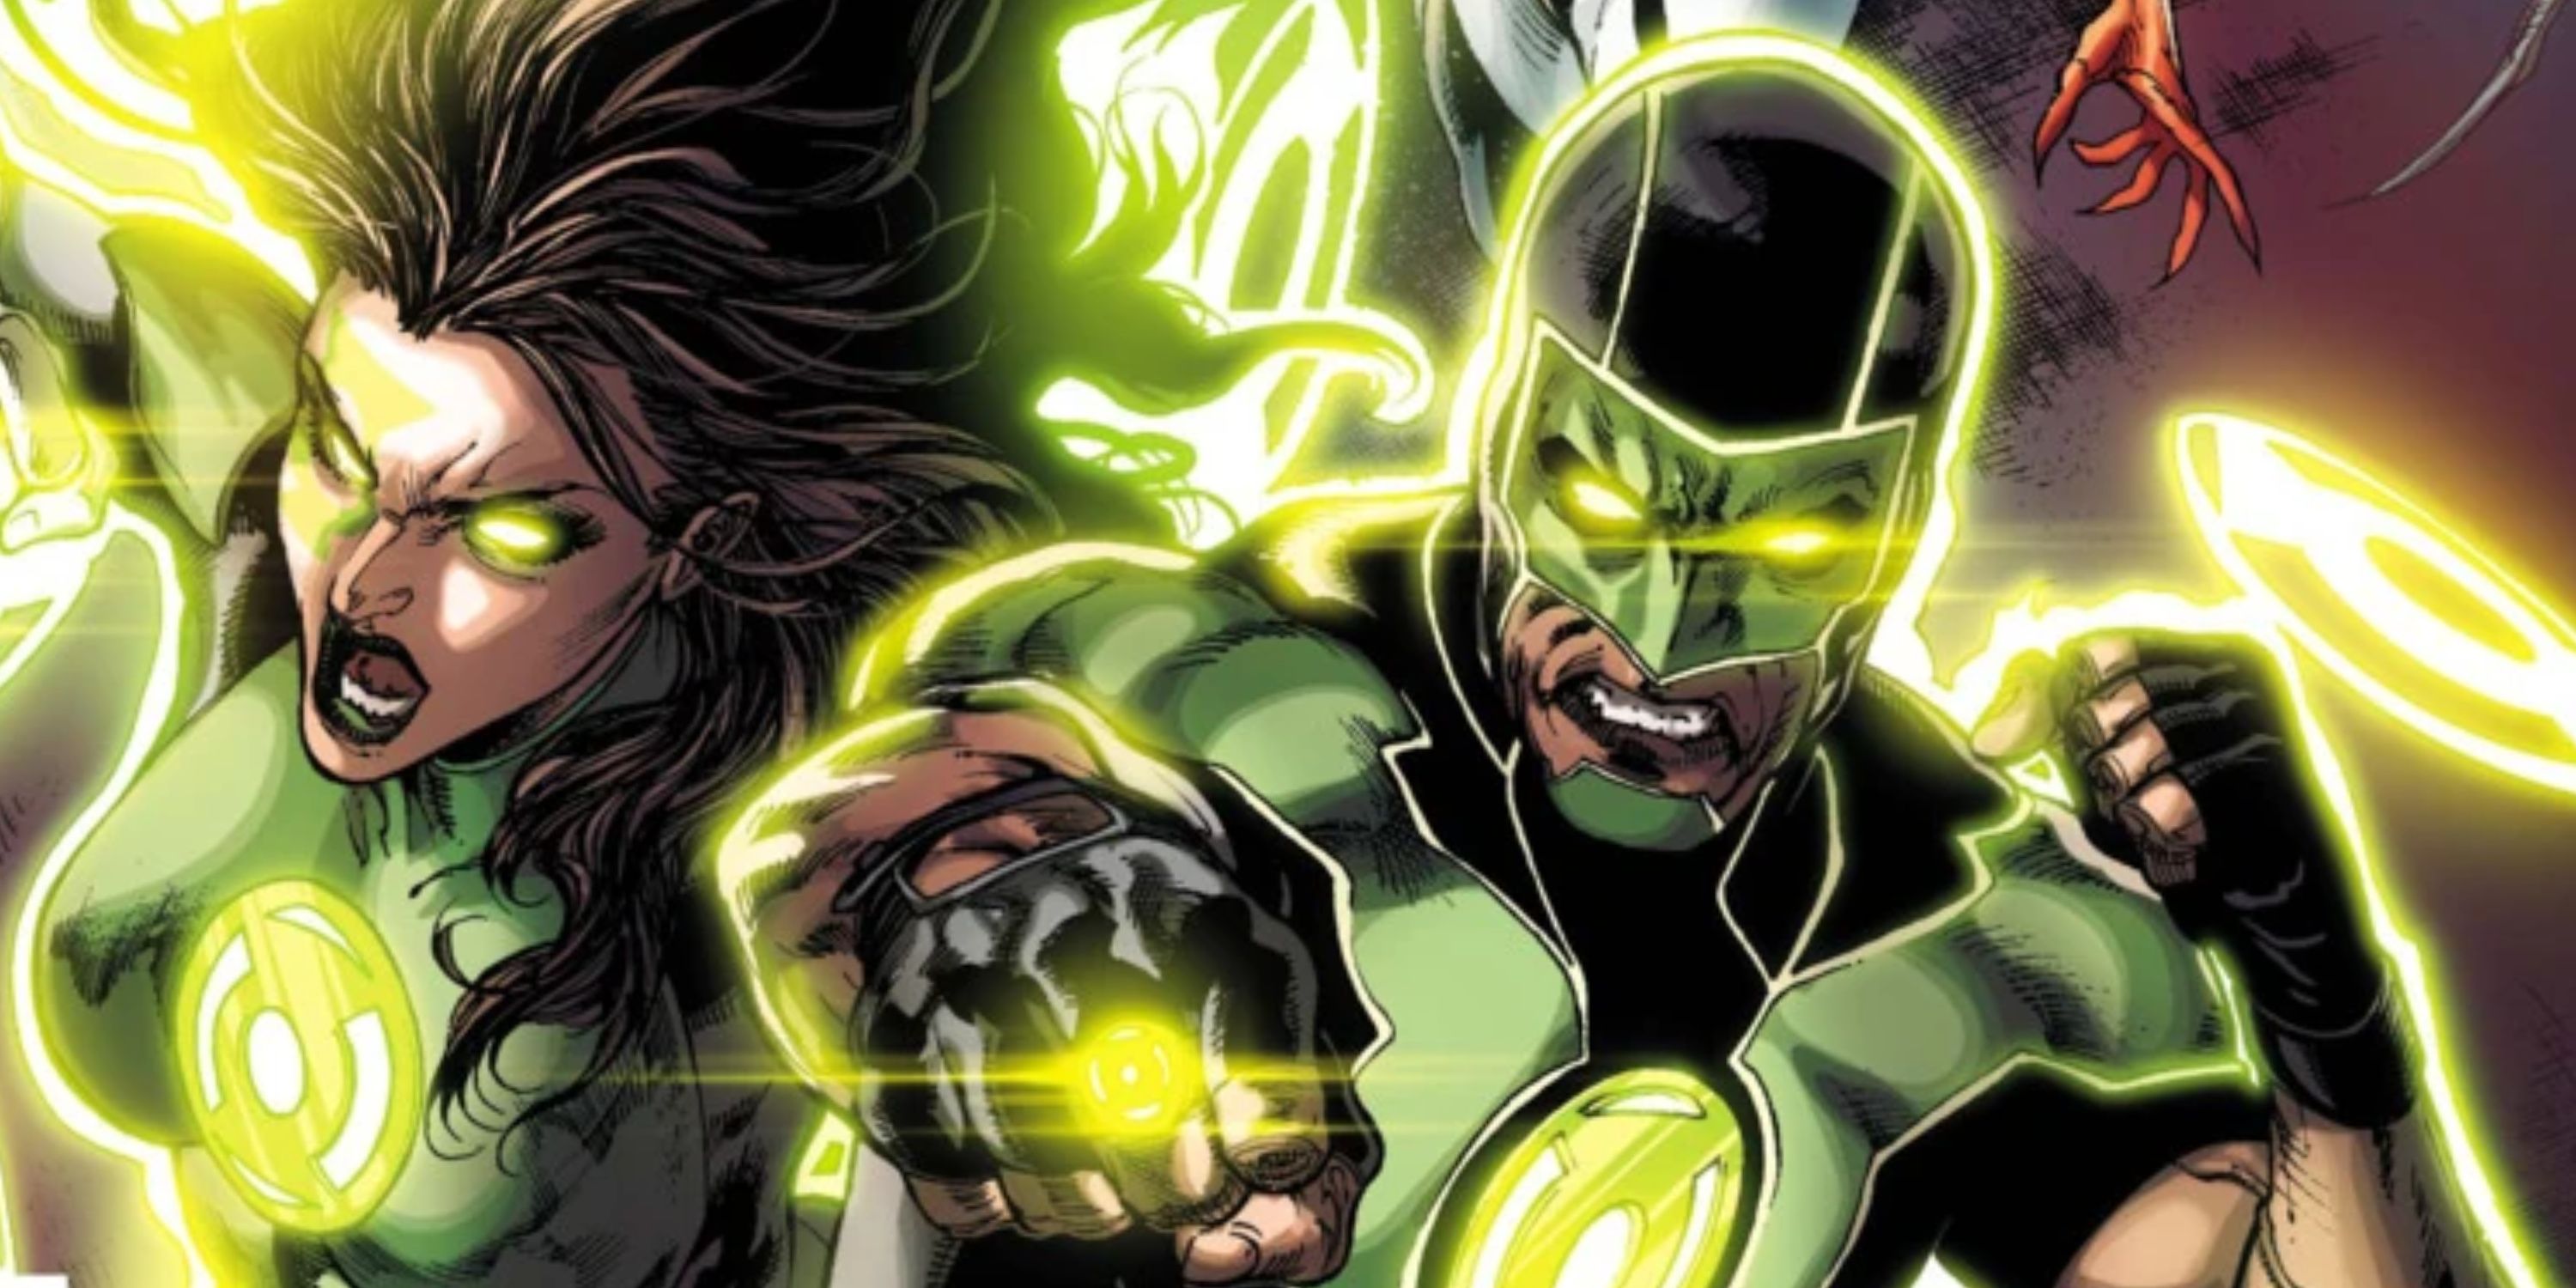 Simon Baz and Jessica Cruz in Green Lanterns Vol. #1 from DC Comics